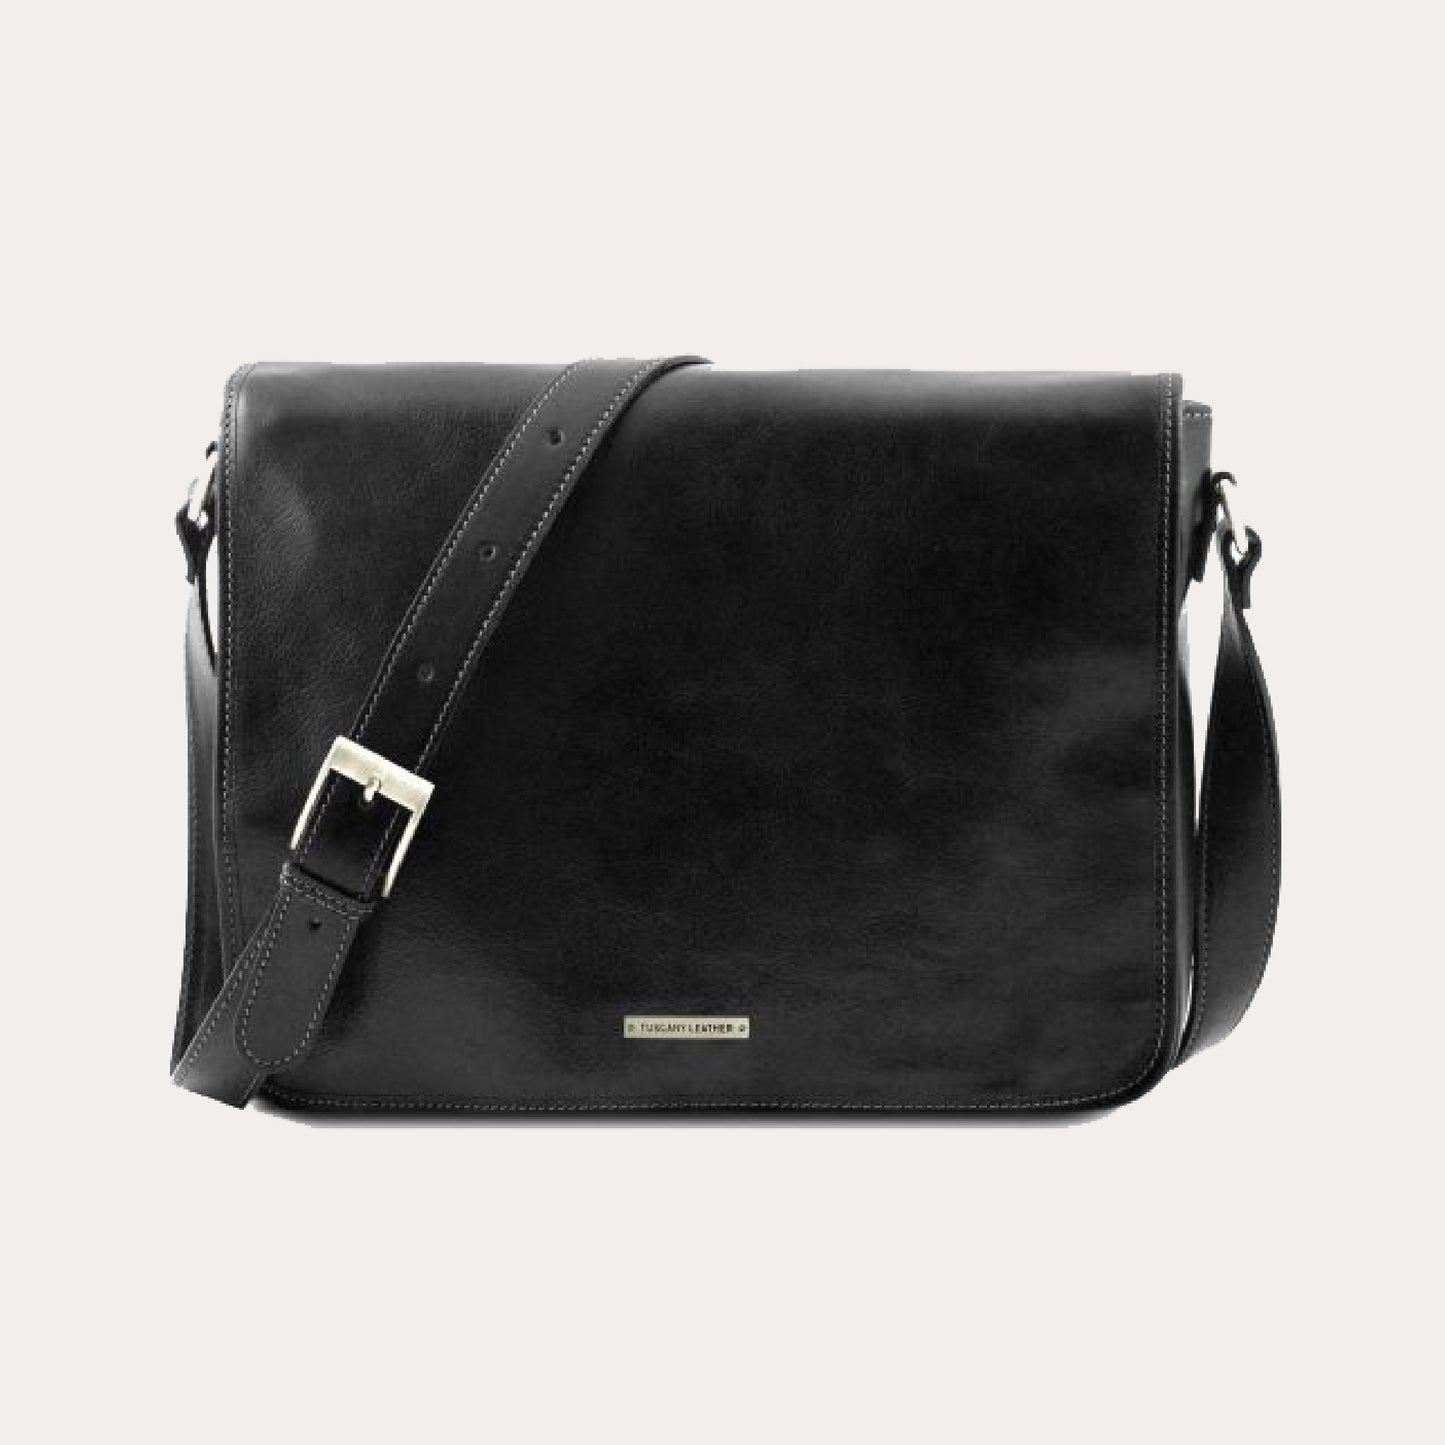 Tuscany Leather Black Leather Messenger Bag